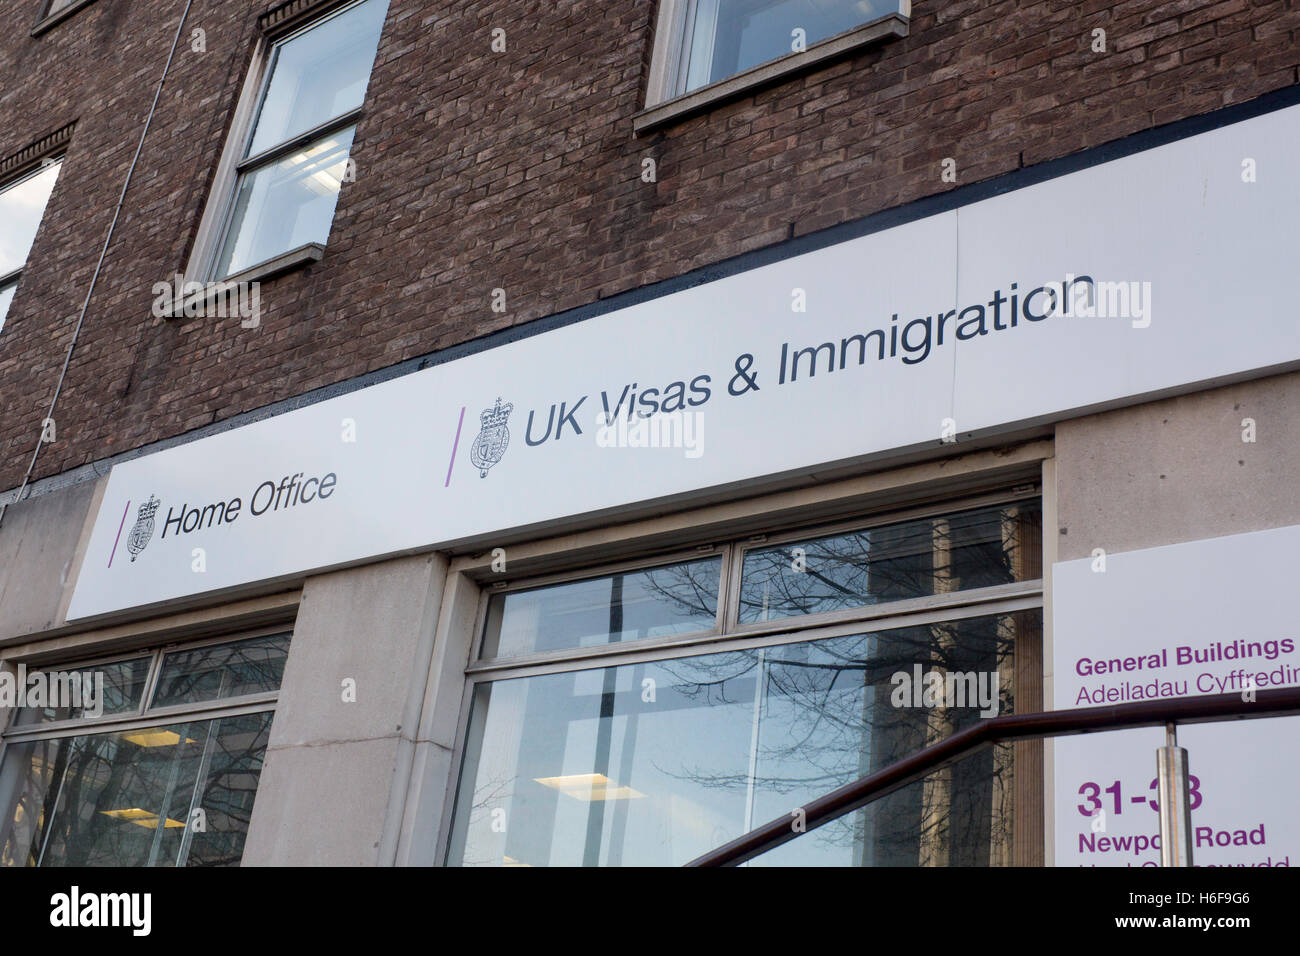 Home Office UK Visas et Immigration Cardiff Wales UK Office sign Banque D'Images